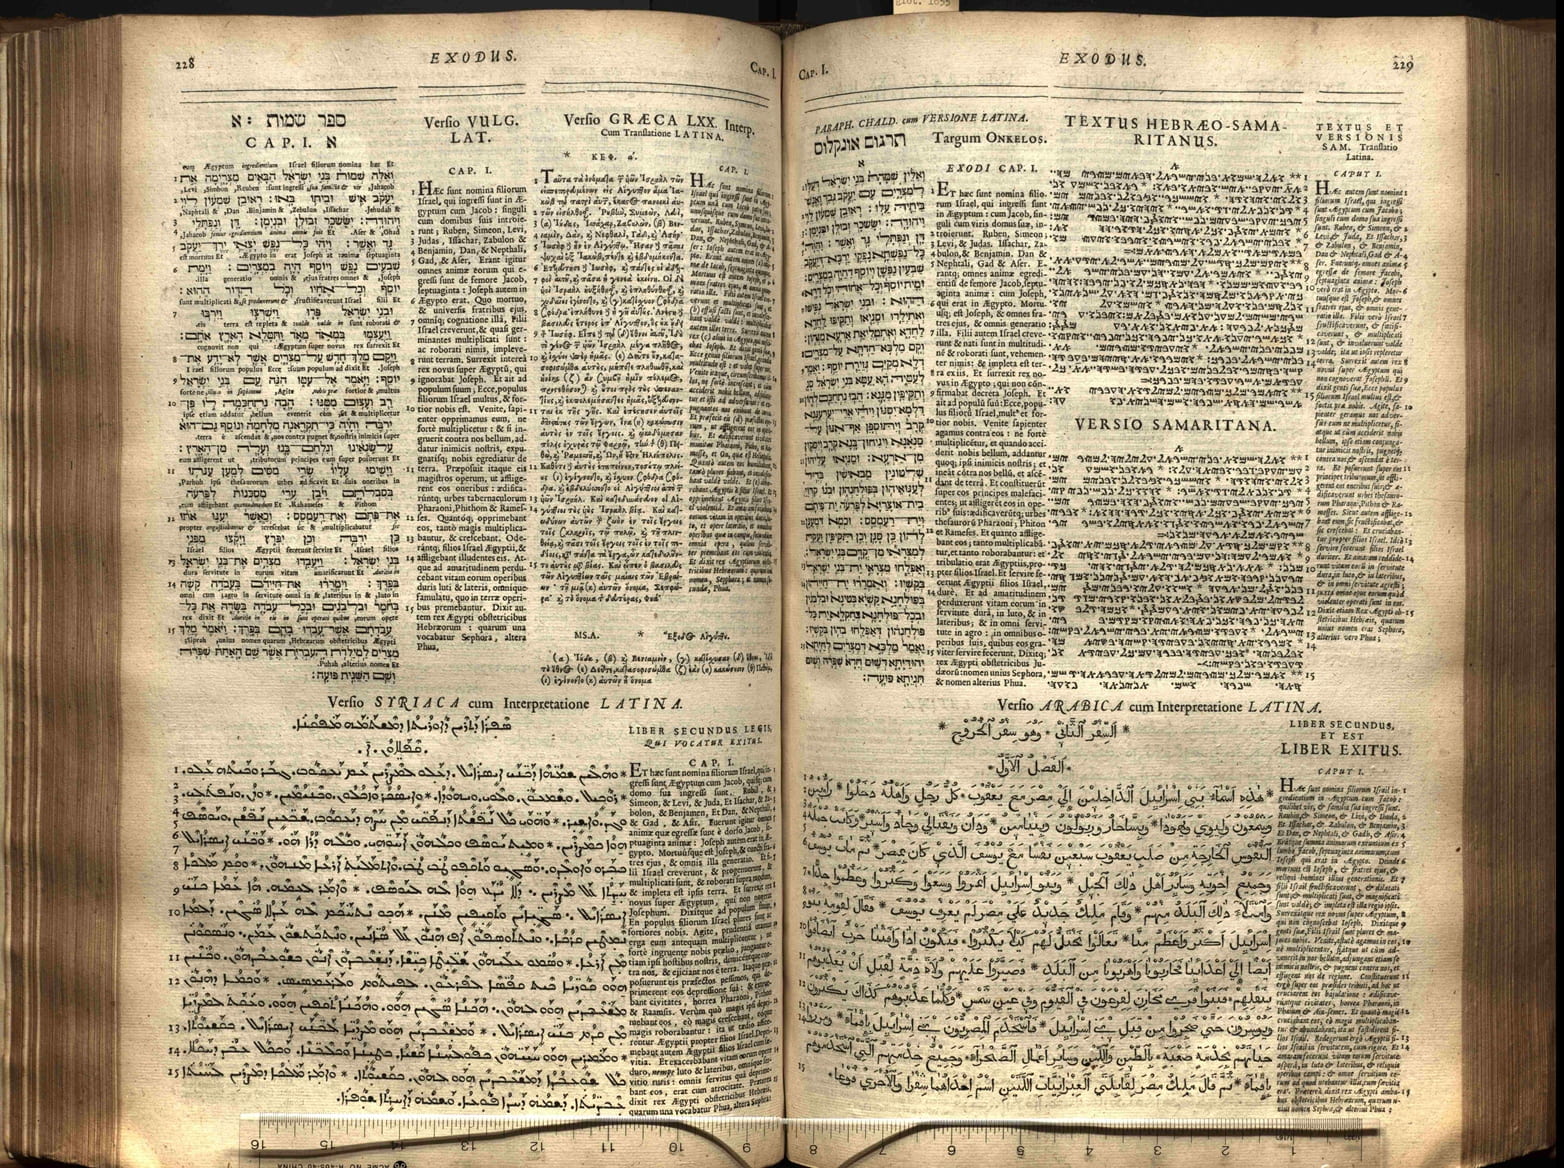 London Polyglot, 1657 f. 228-229_Credit_Fisher Rare Books Library